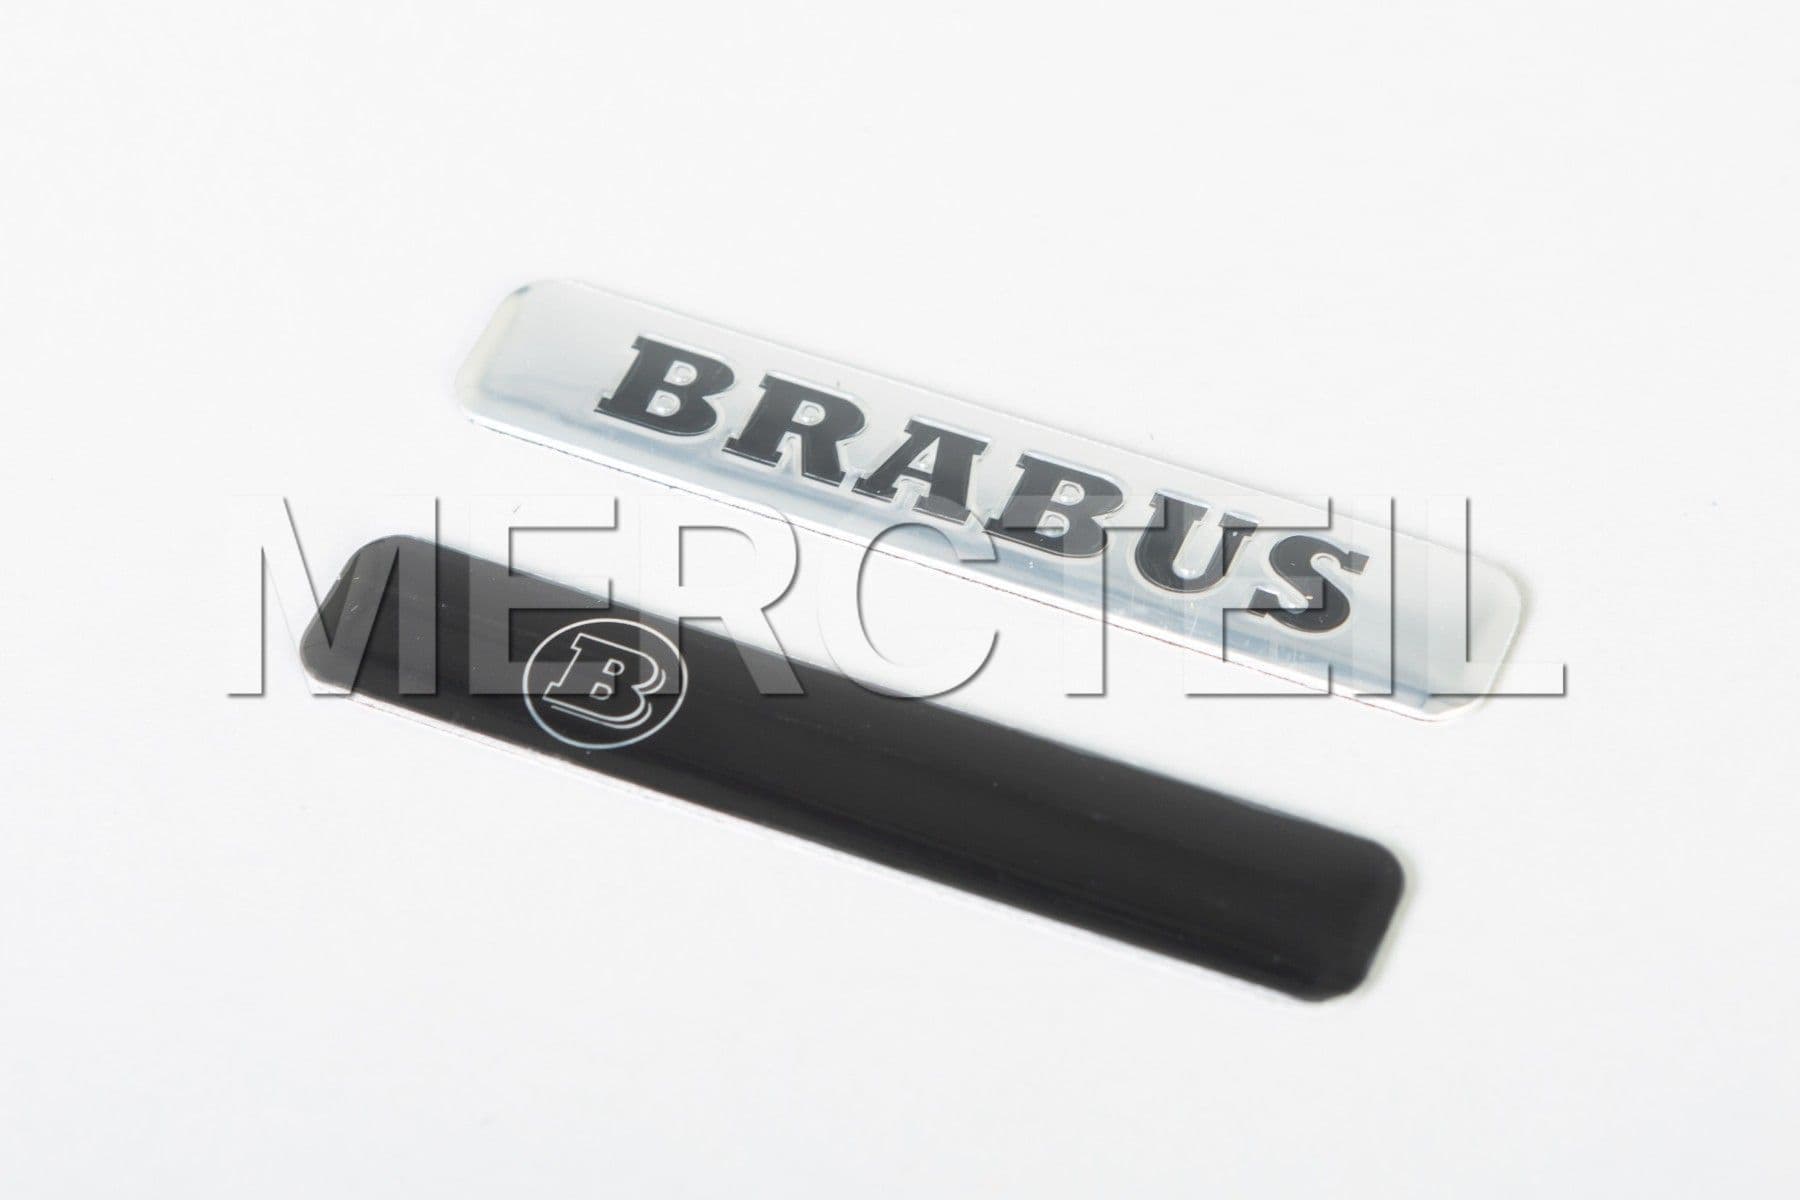 CLS 63 BRABUS Frontspoilerlippe Carbon Matt Original BRABUS (Teilenummer: 218-245-10)